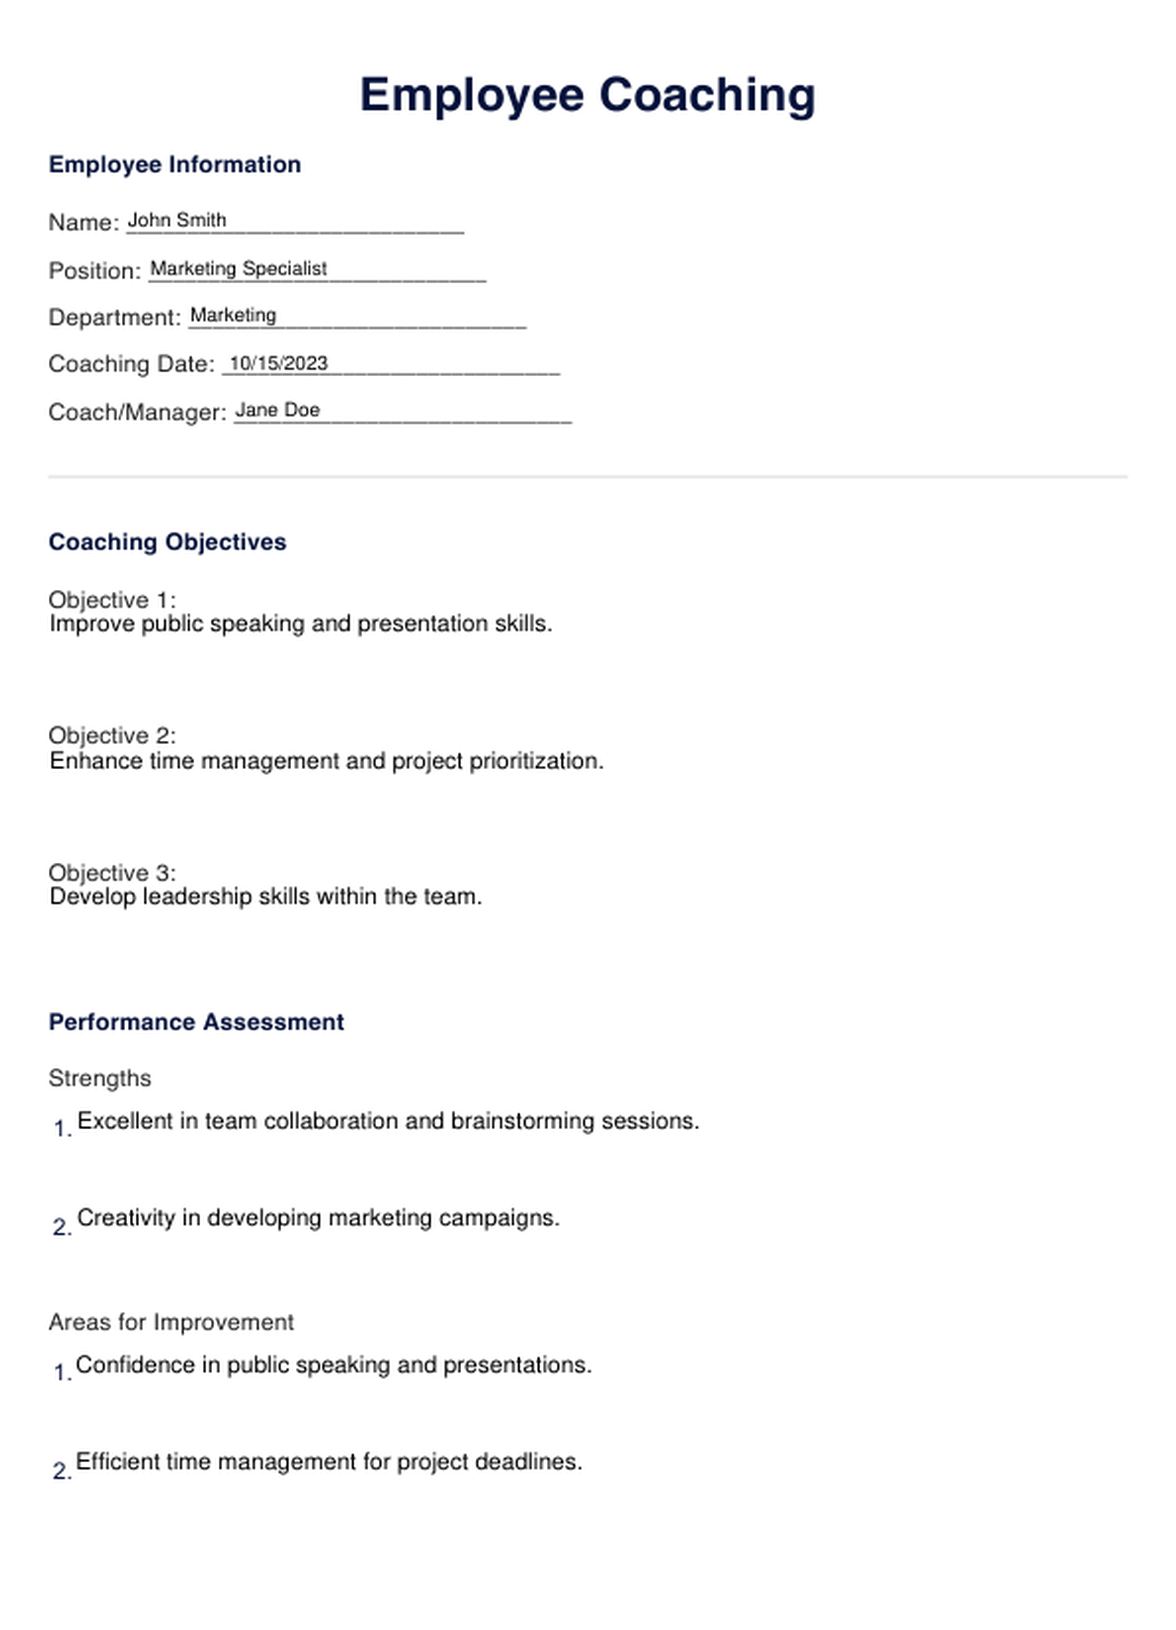 Employee Coaching Template PDF Example